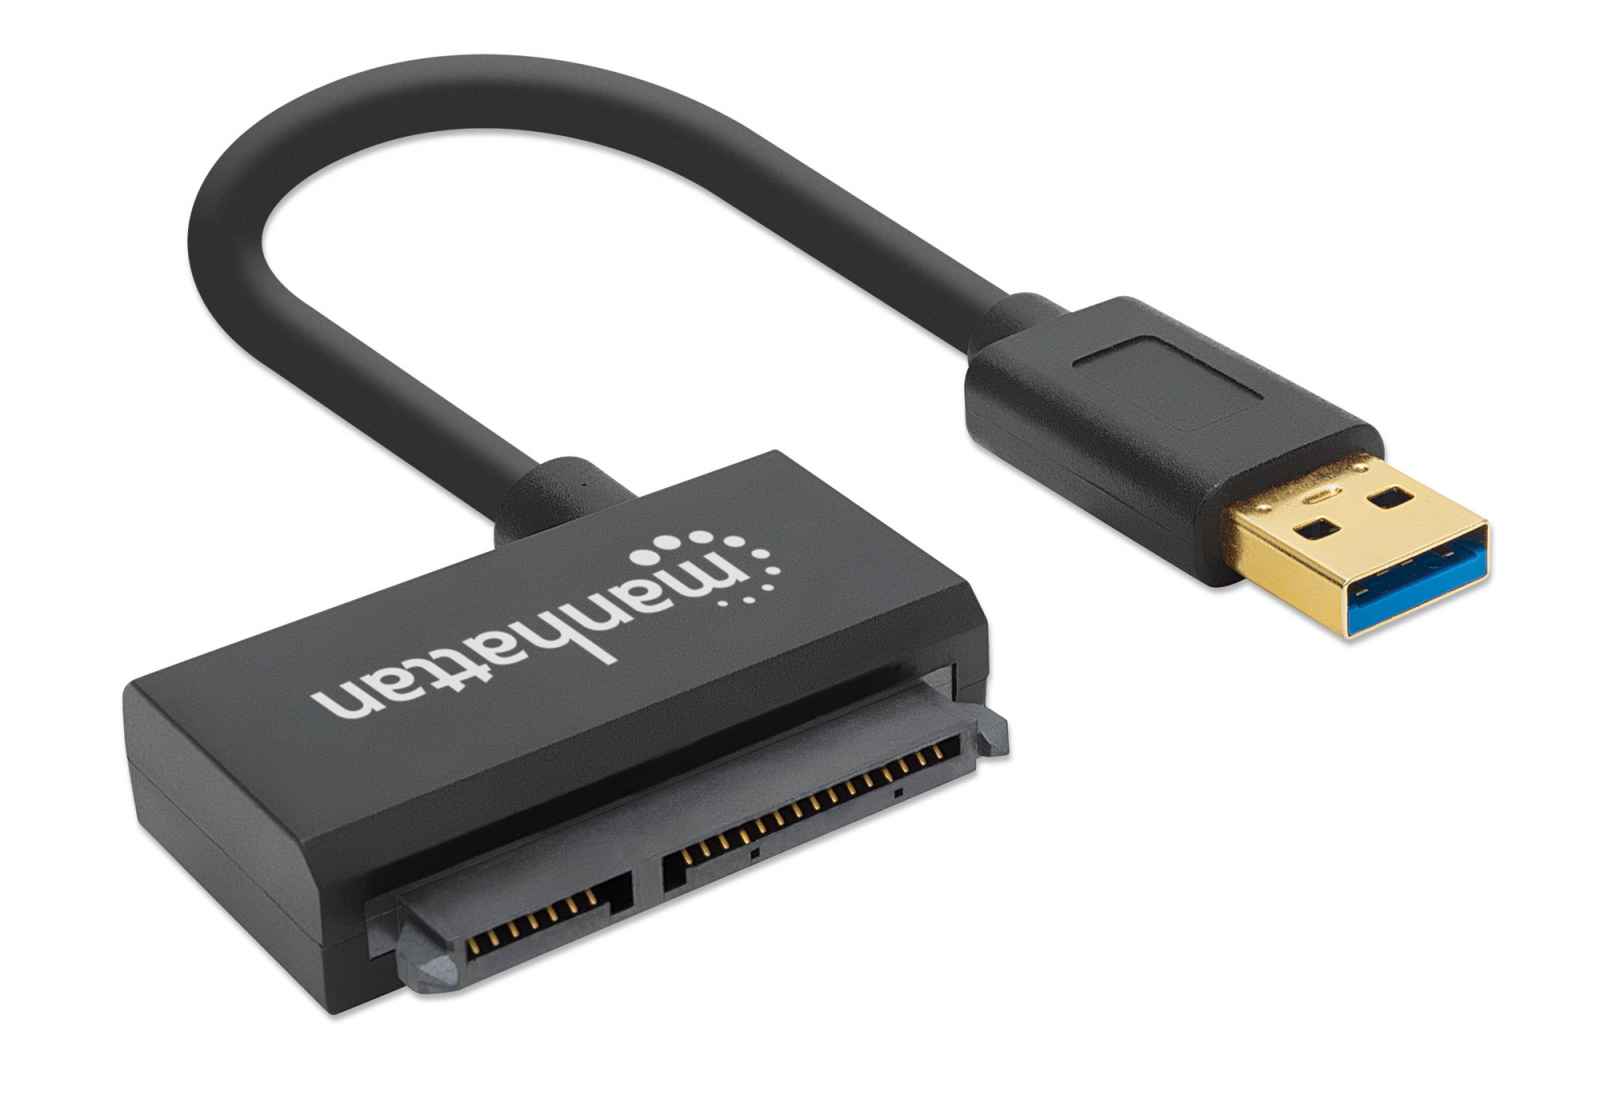 Manhattan Adaptador USB SuperSpeed a SATA (130424)